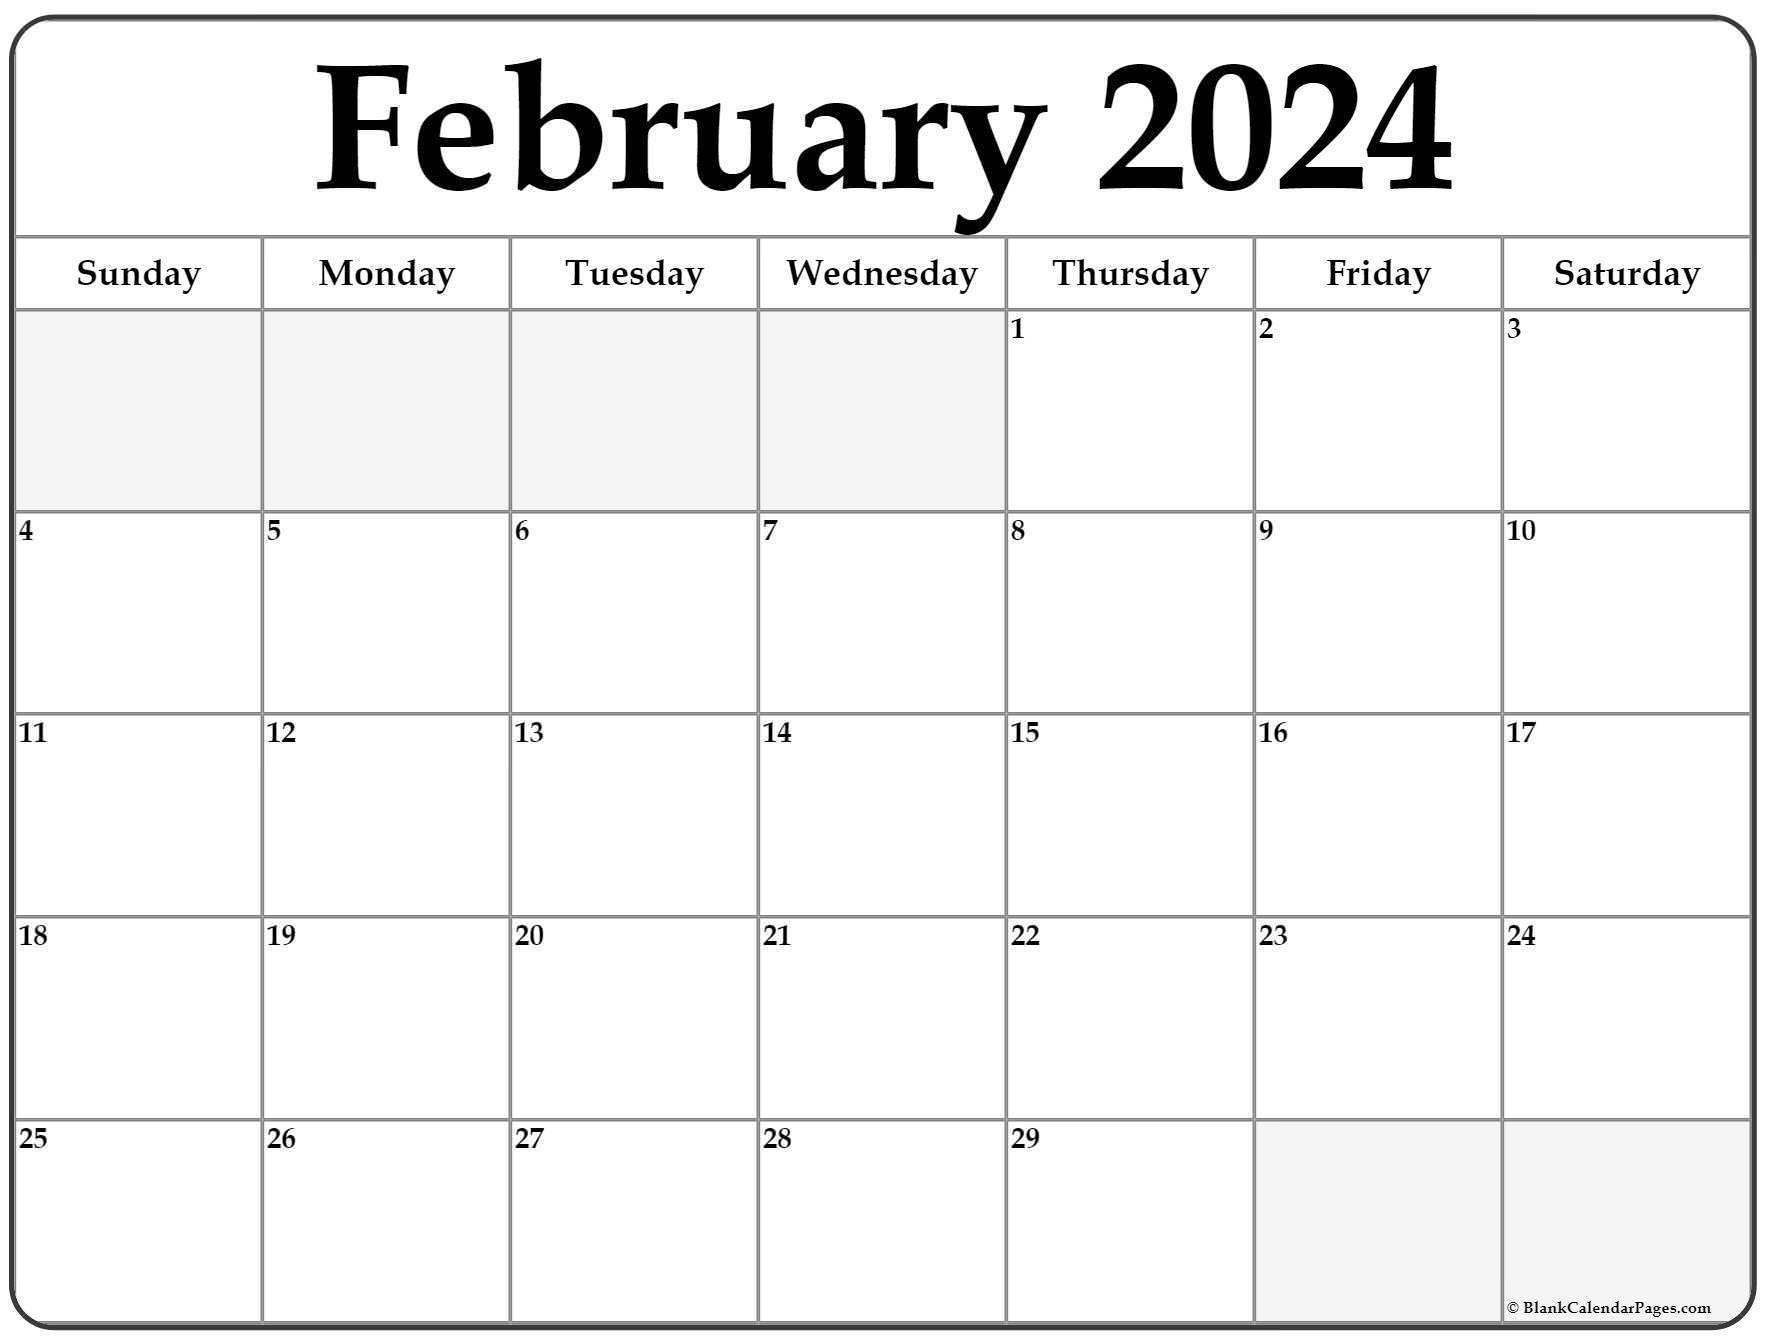 February 2022 Blank Calendar February 2022 Calendar | Free Printable Calendar Templates